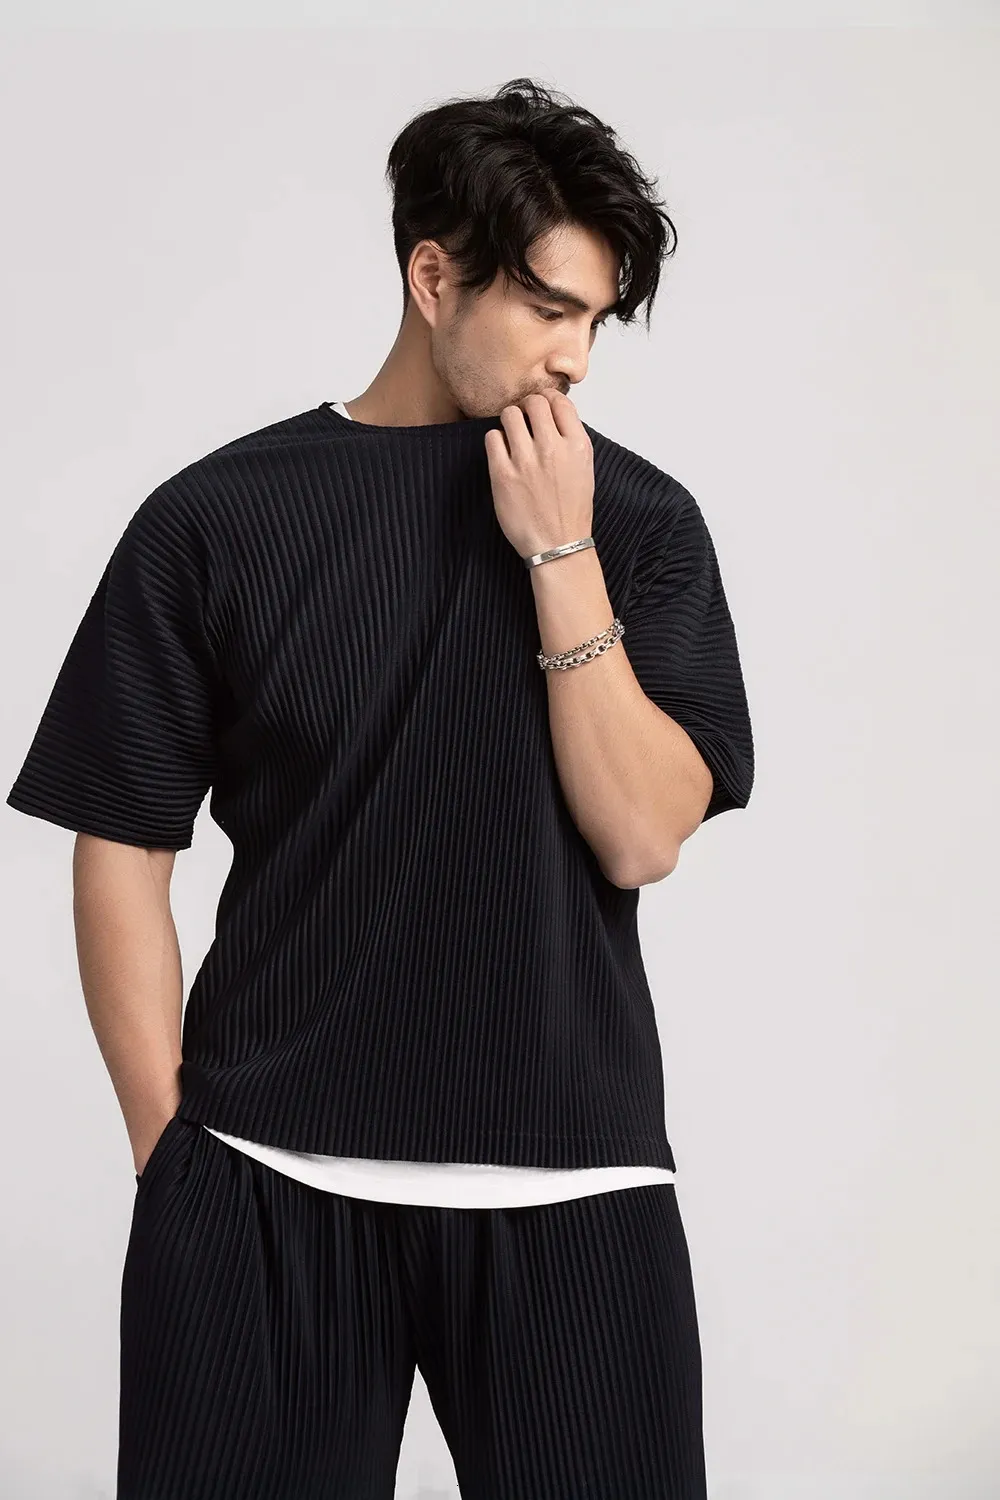 Miyake Pleated T Shirt For Men Summer Clothes Short Sleeve Plain T-Shirt Fashion Black Shirts Round Collar Sports Top 240408